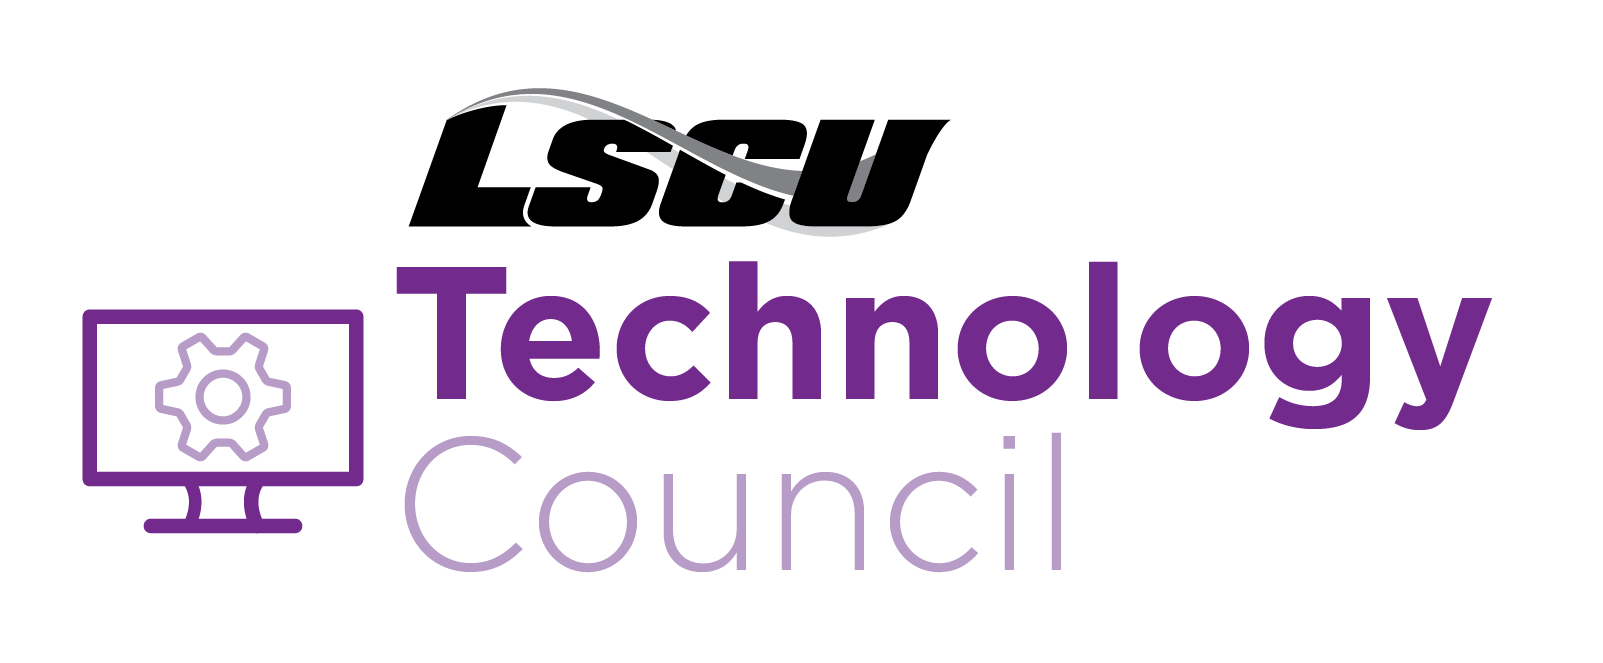 LSCU Technology Council